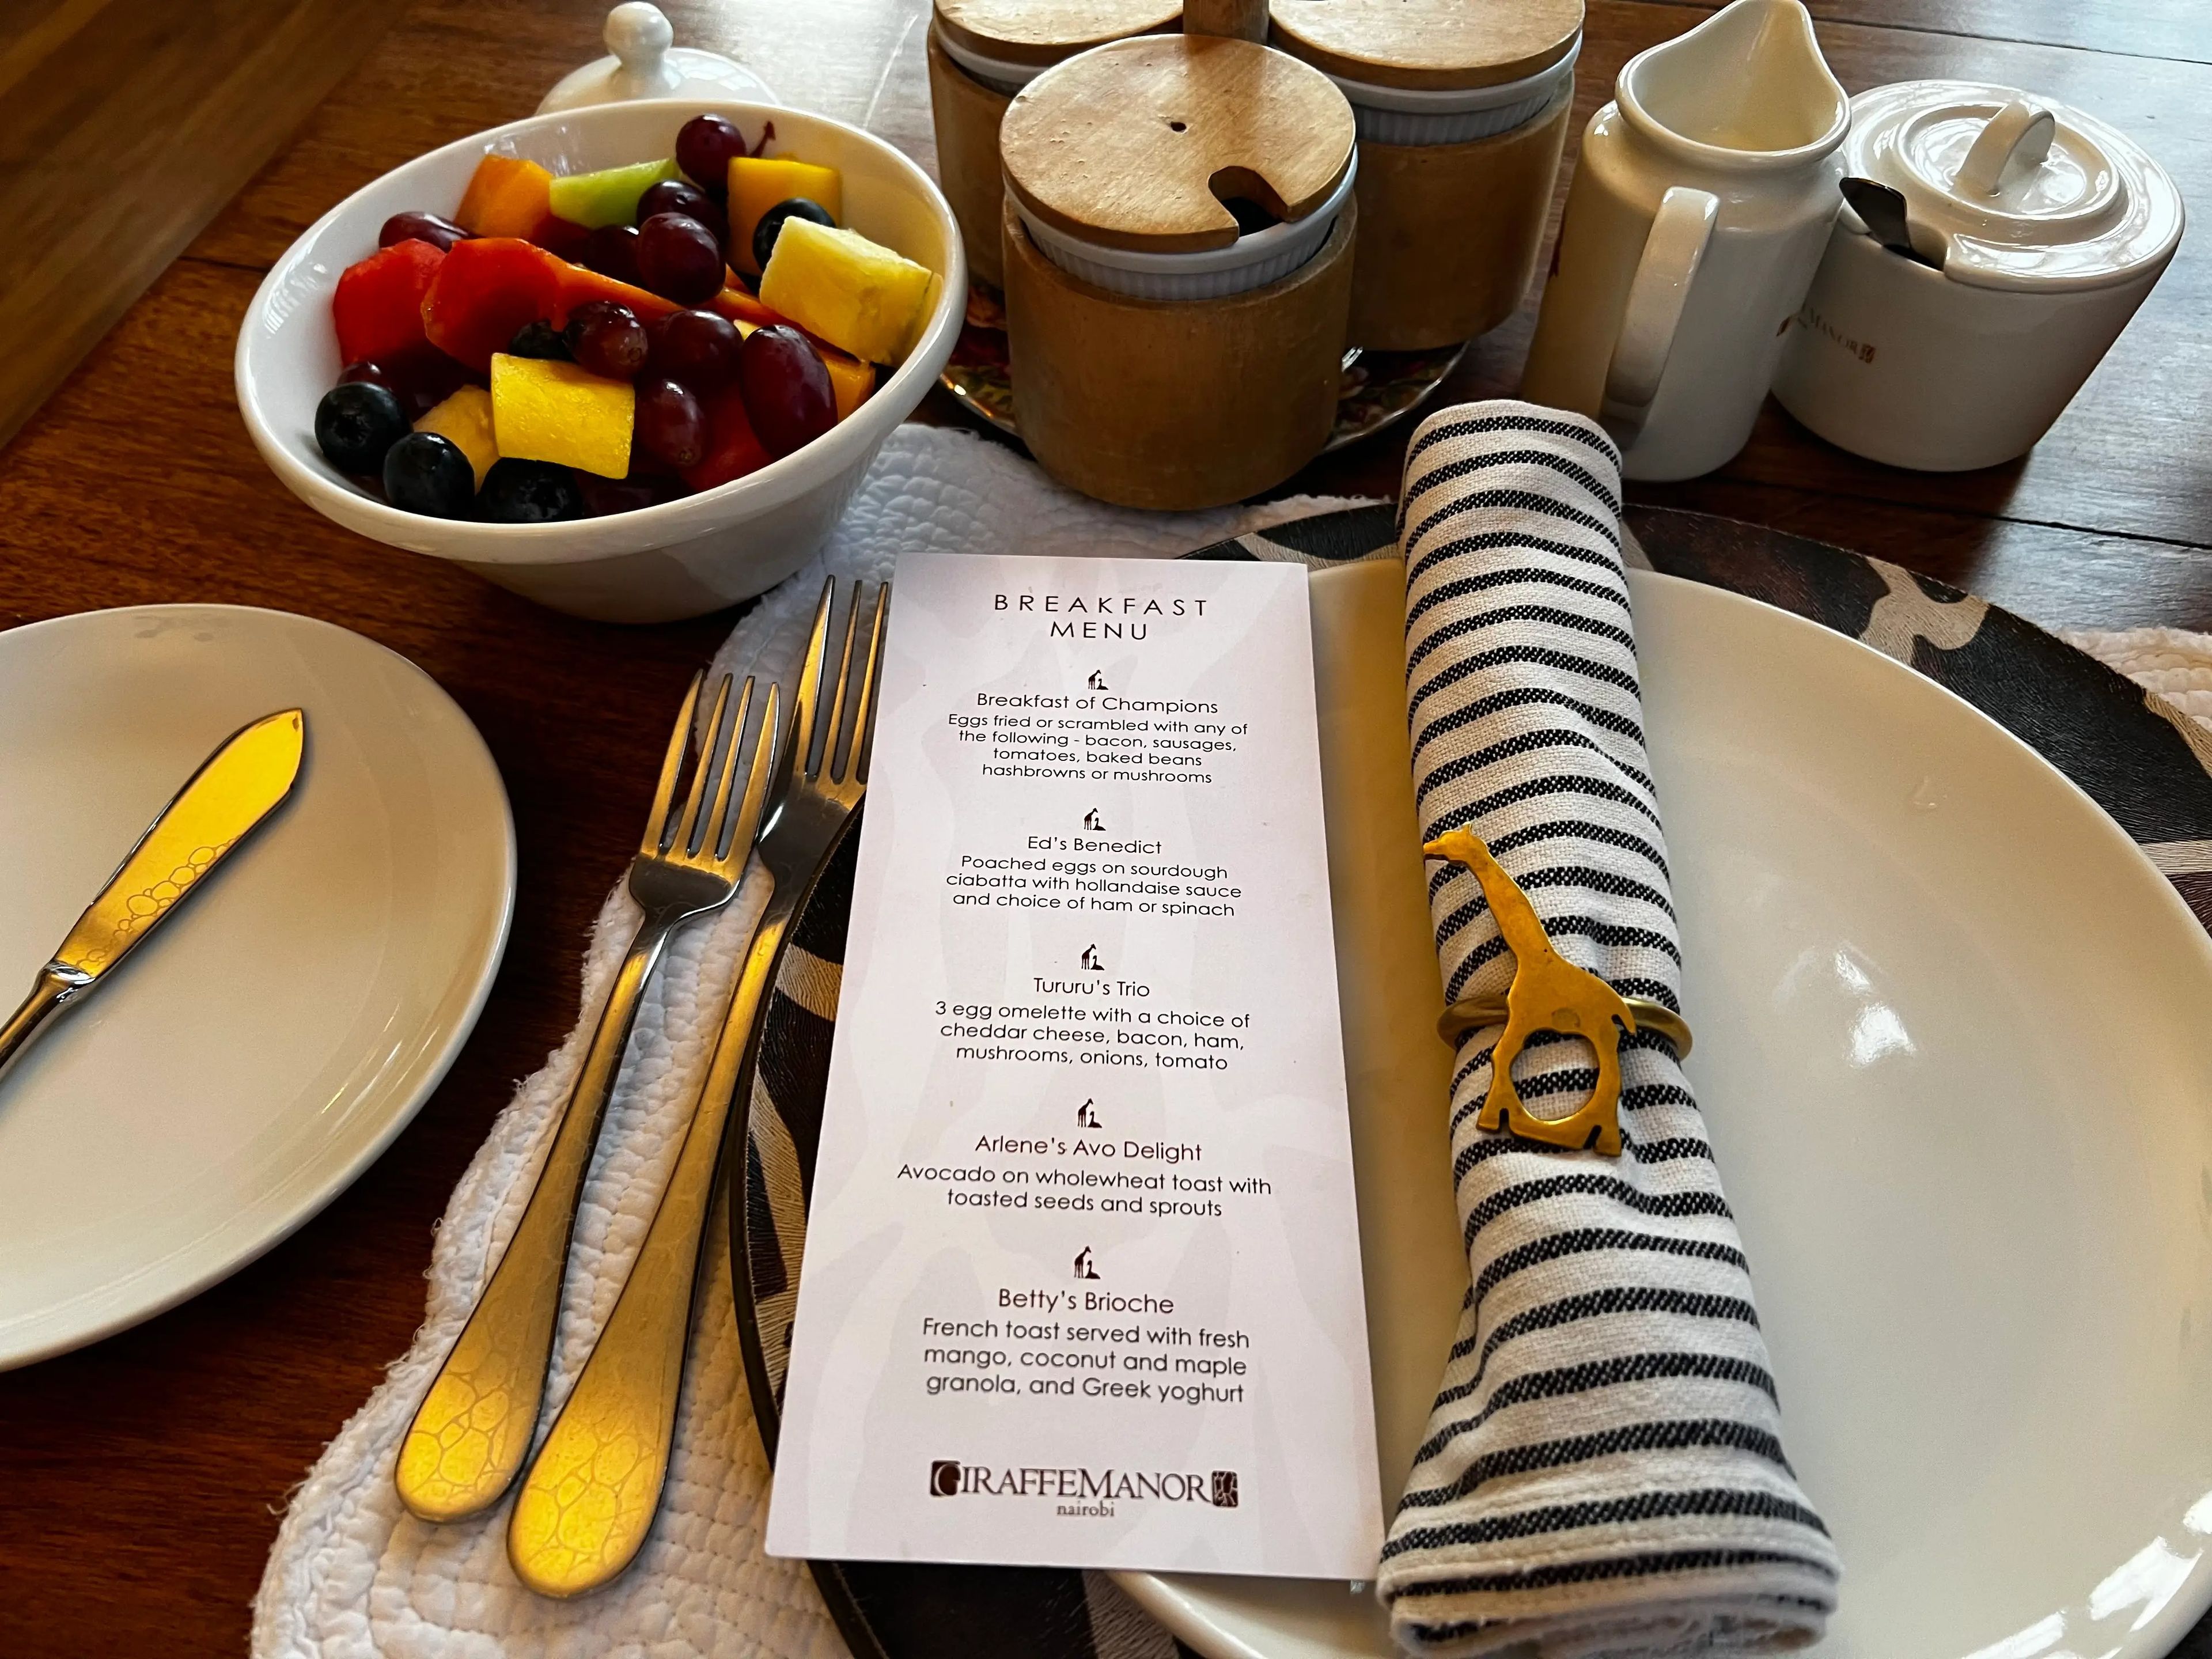 Breakfast menu next to gold silverware and giraffe napkin ring 